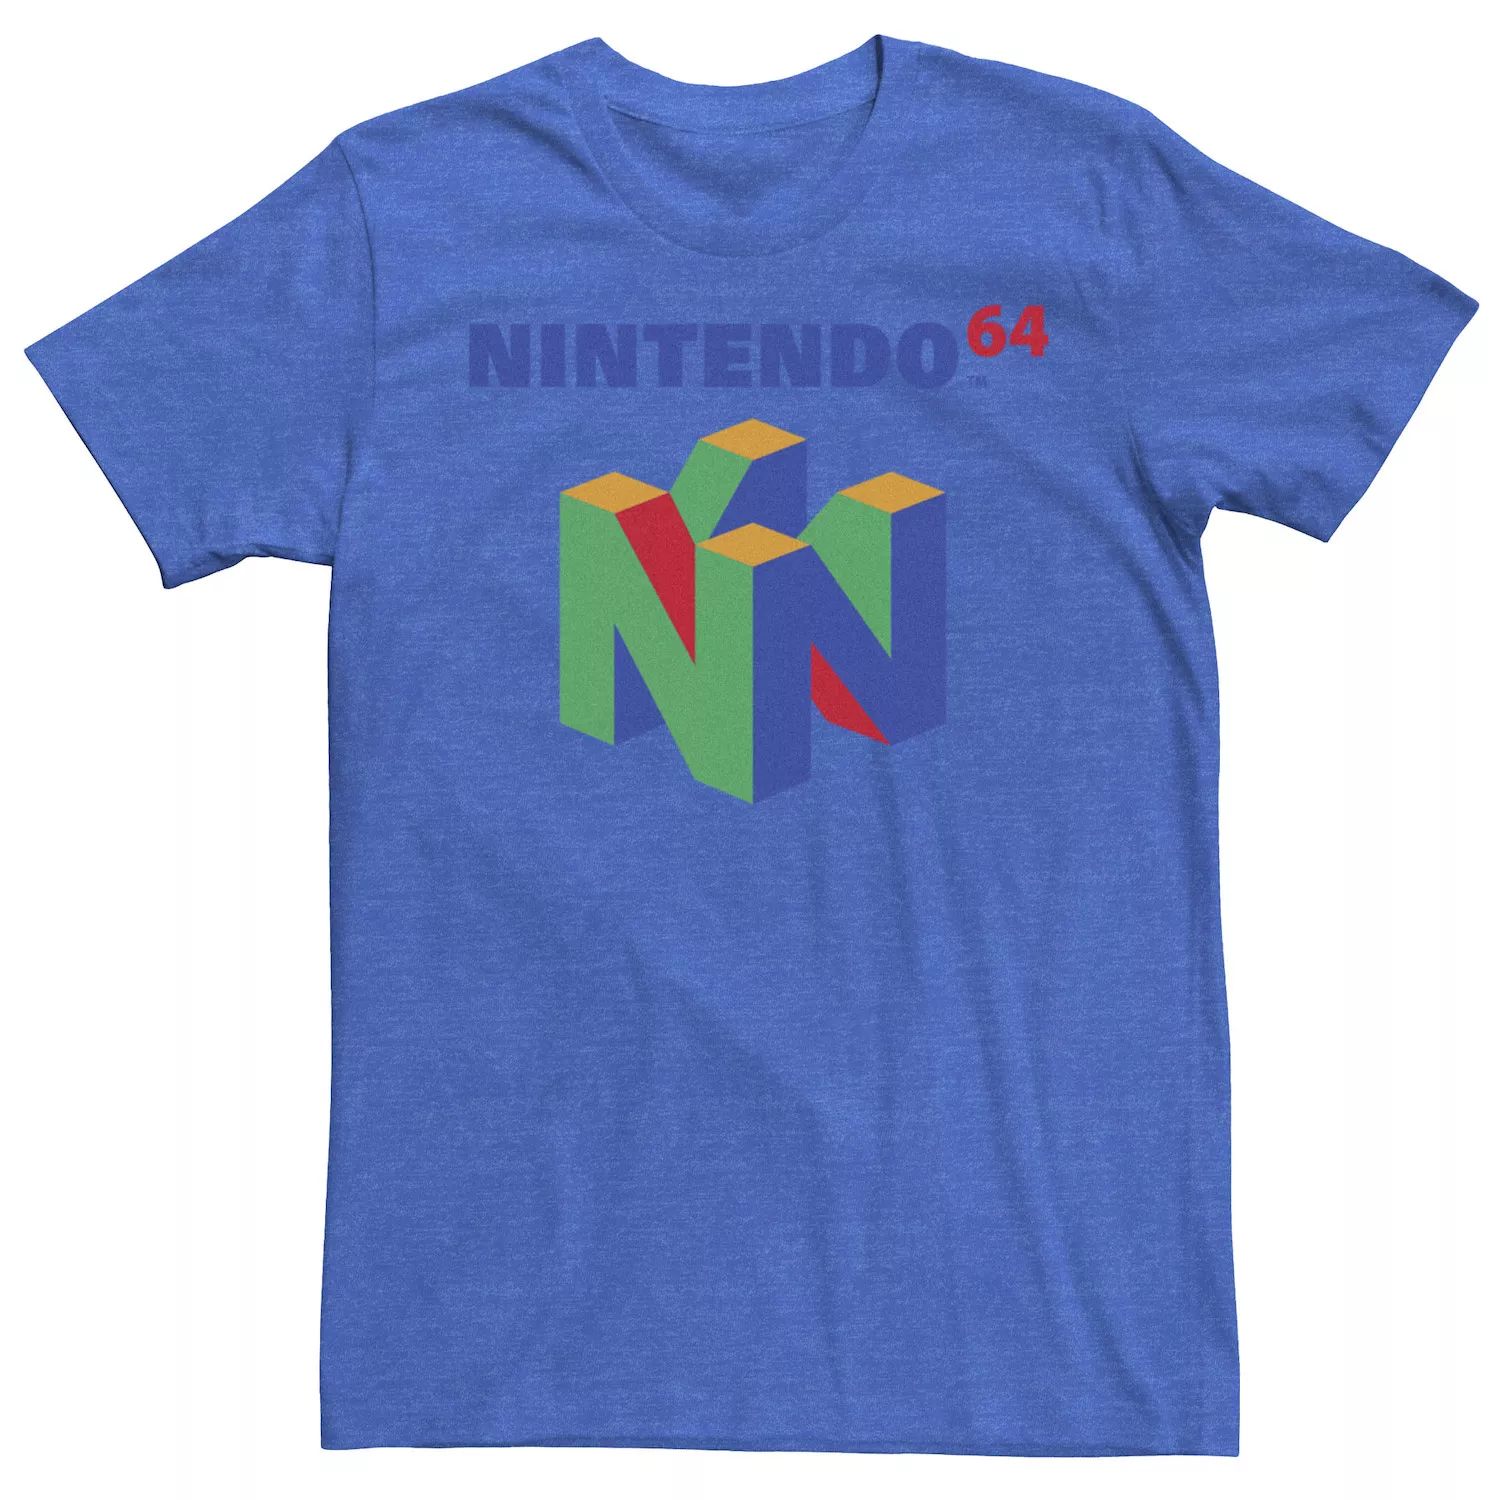 Мужская красочная футболка с логотипом Nintendo 64 Licensed Character